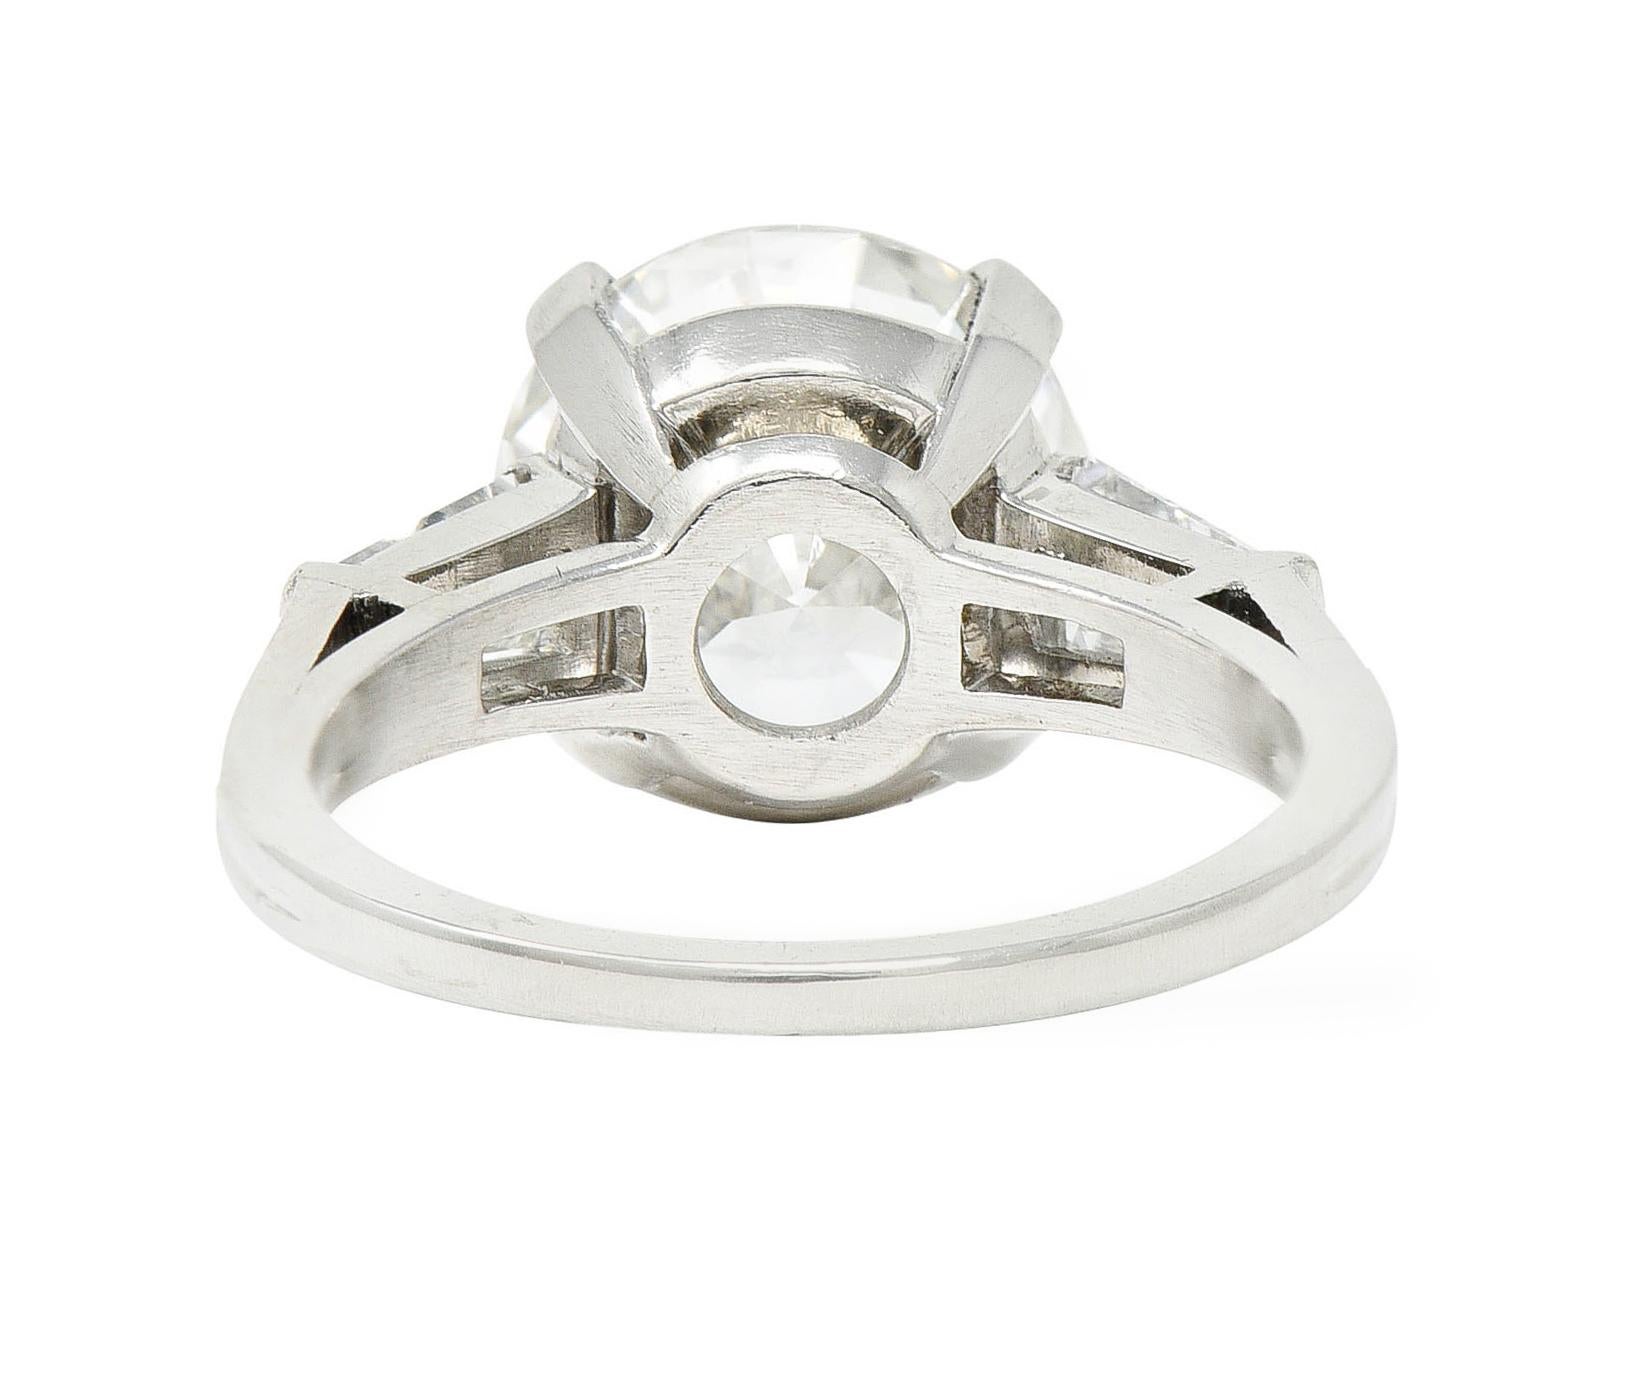 Brilliant Cut Tiffany & Co. 3.94 Carats Round Brilliant Diamond Platinum Engagement Ring GIA